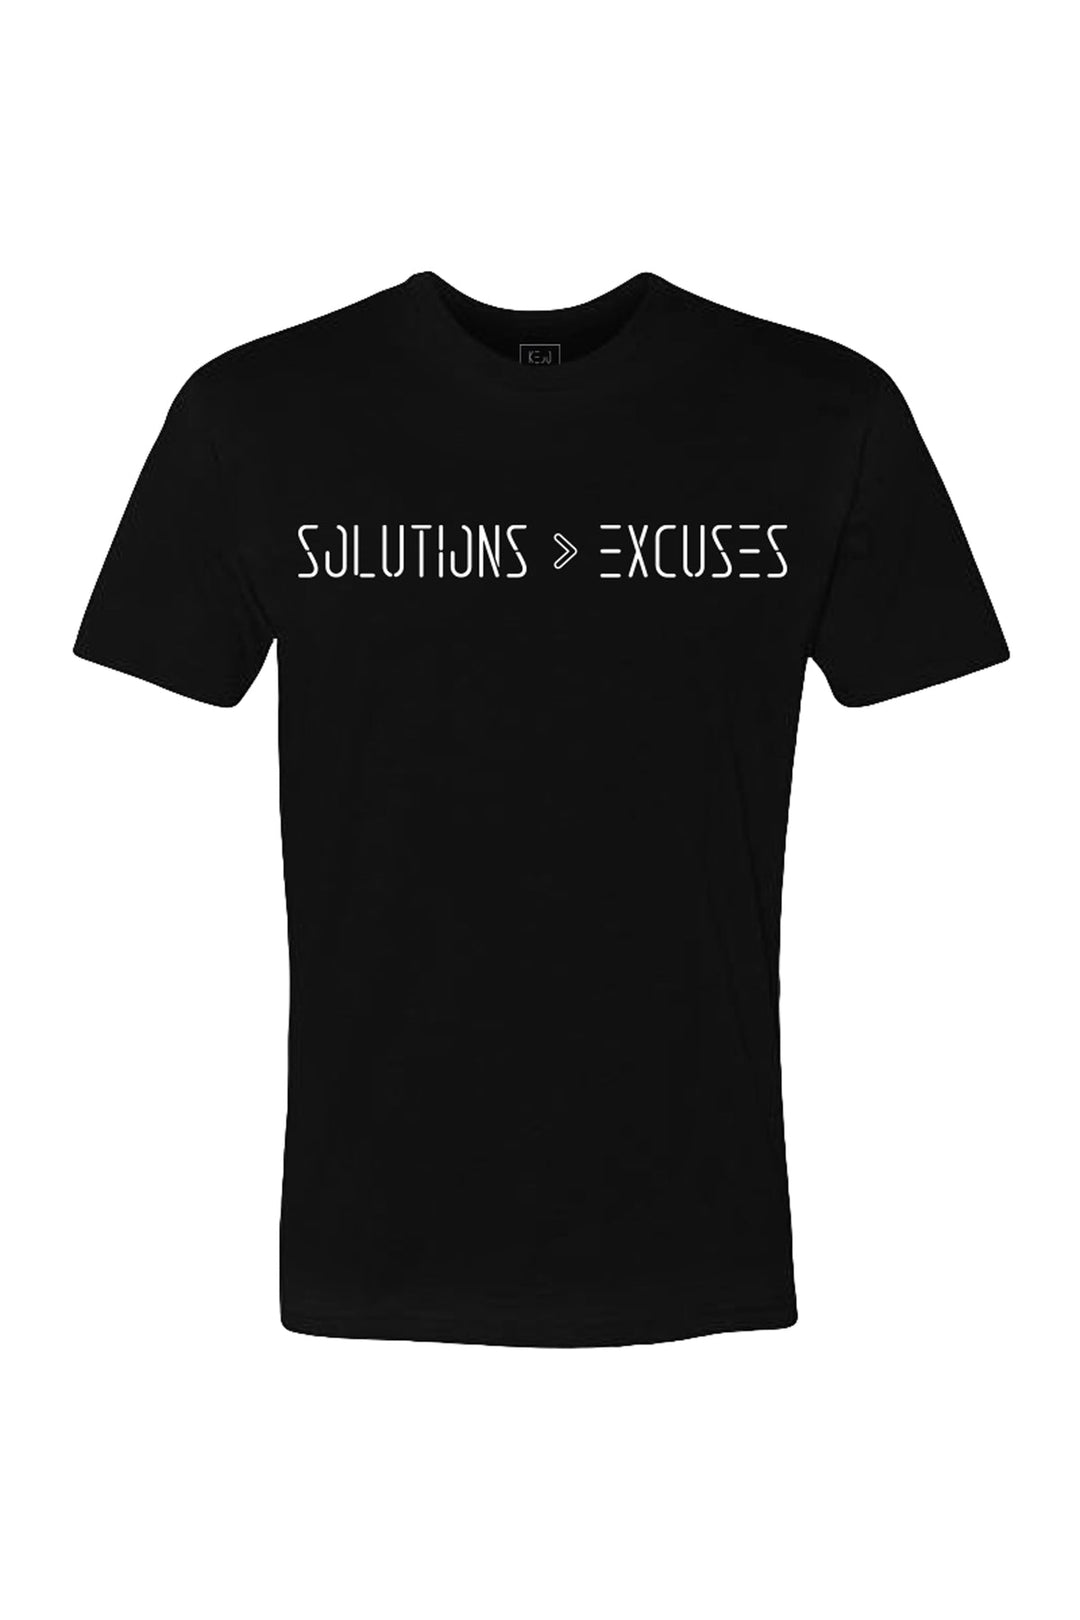 SOLUTIONS > EXCUSES - Unisex